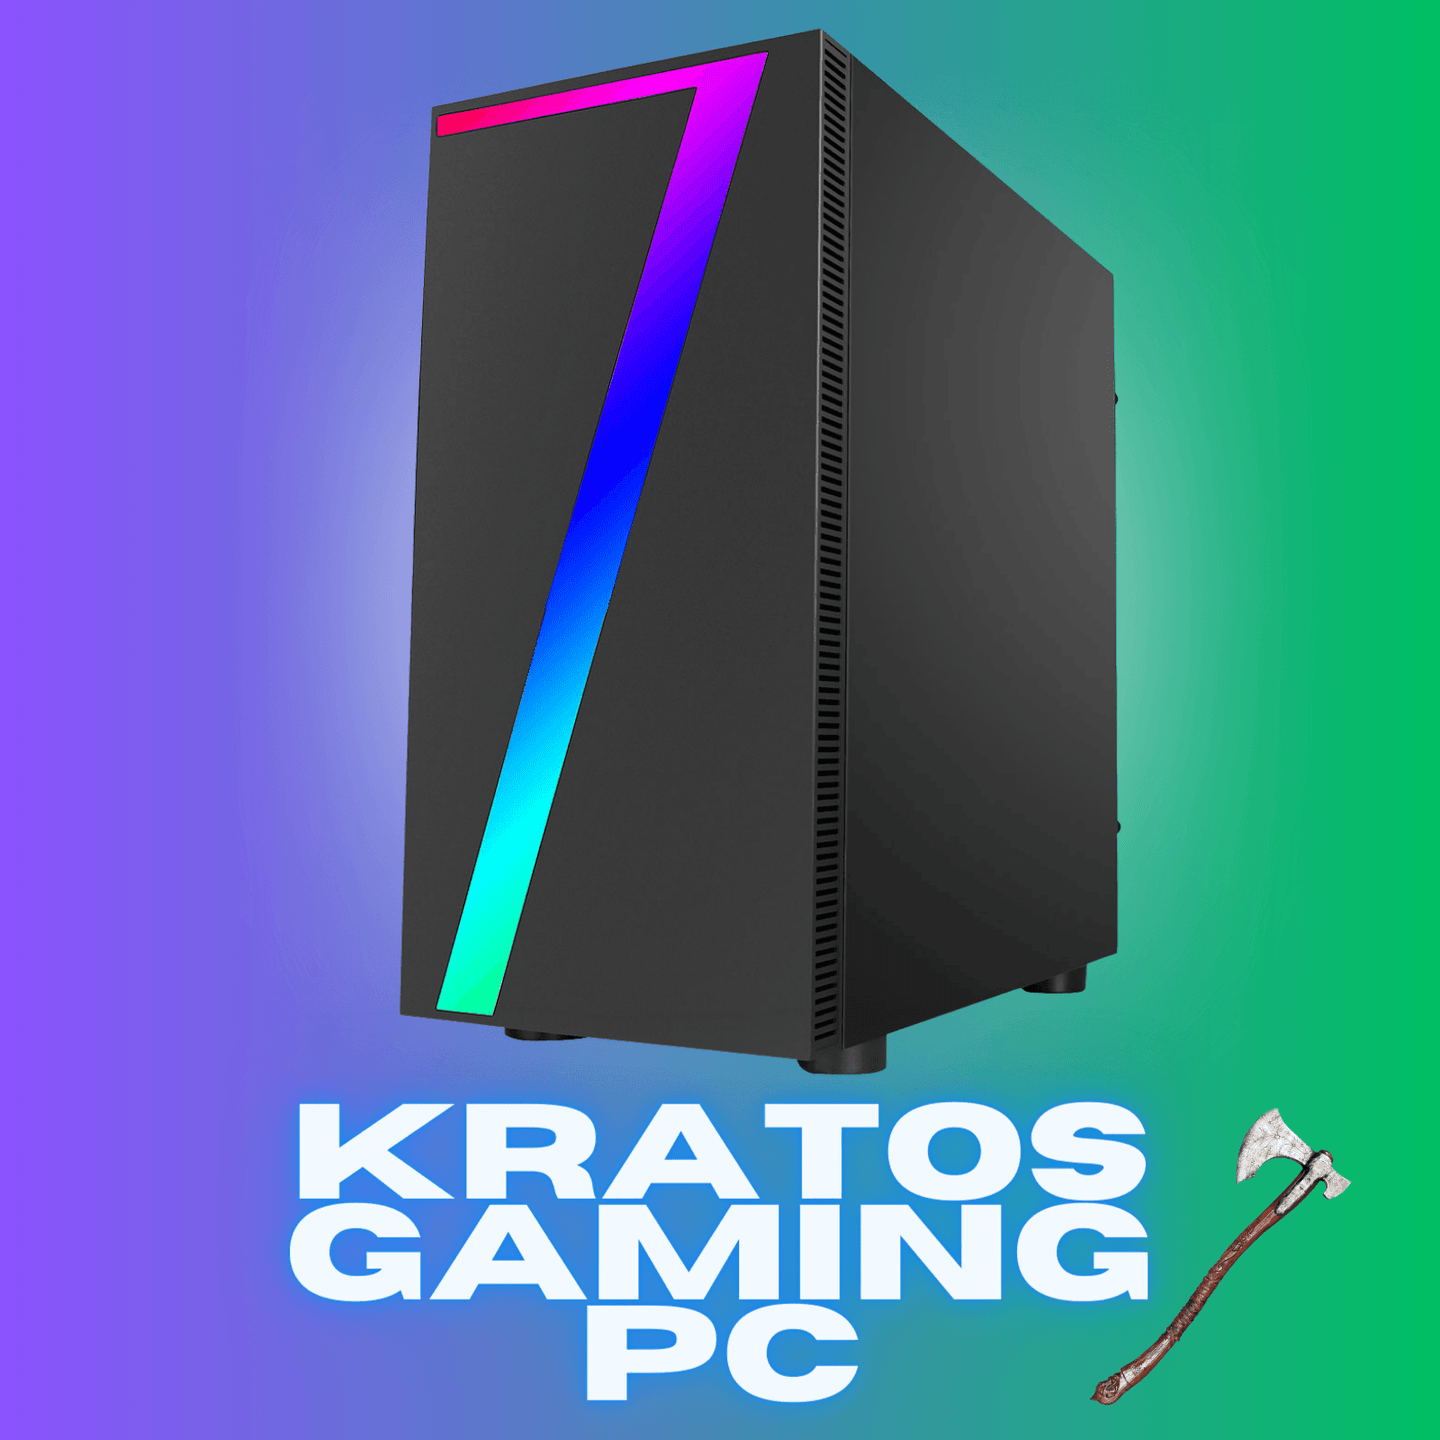 Kratos RGB PC Intel Core i7-4790 16GB 512GB SSD WIN10 HOME